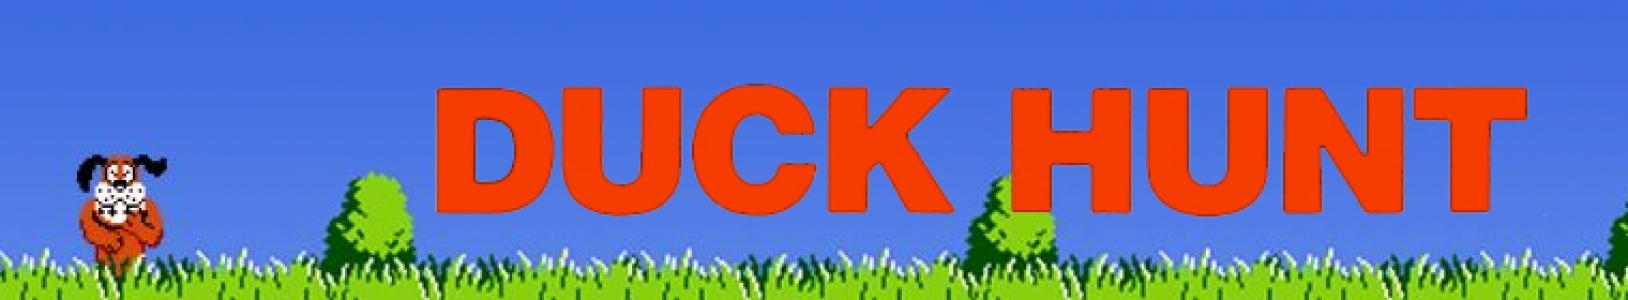 Super Mario Bros. / Duck Hunt banner